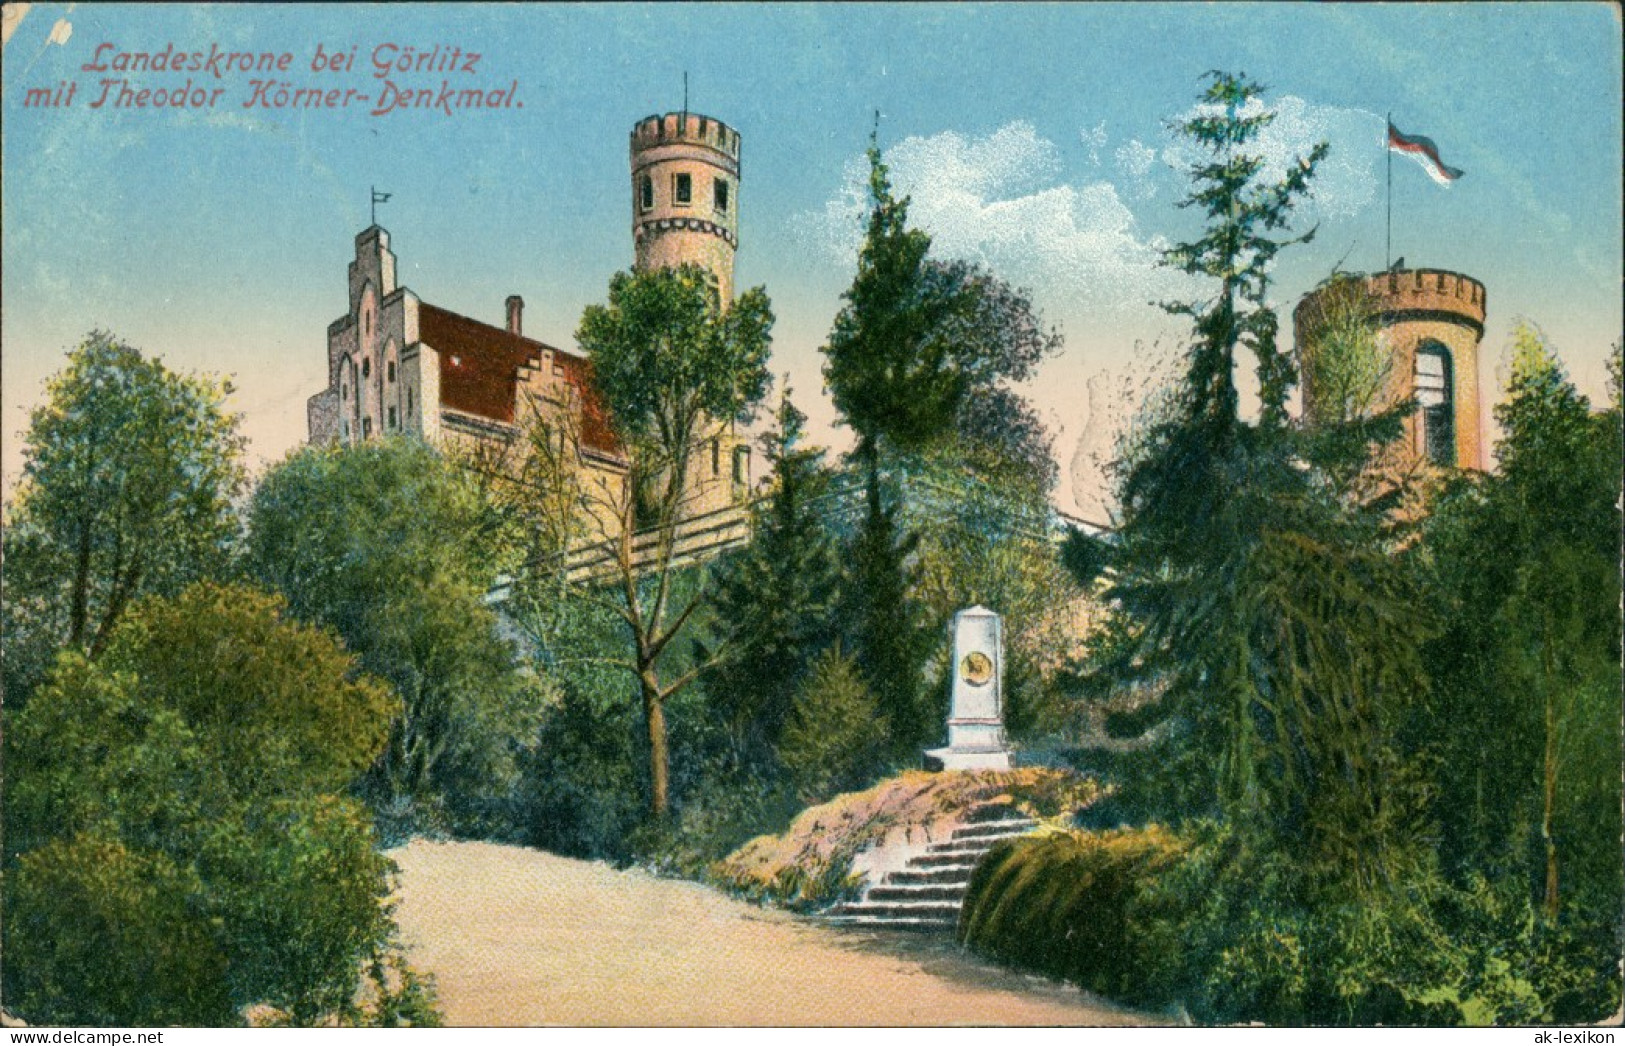 Ansichtskarte Görlitz Zgorzelec Landeskrone, Körner Denkmal 1914 - Görlitz